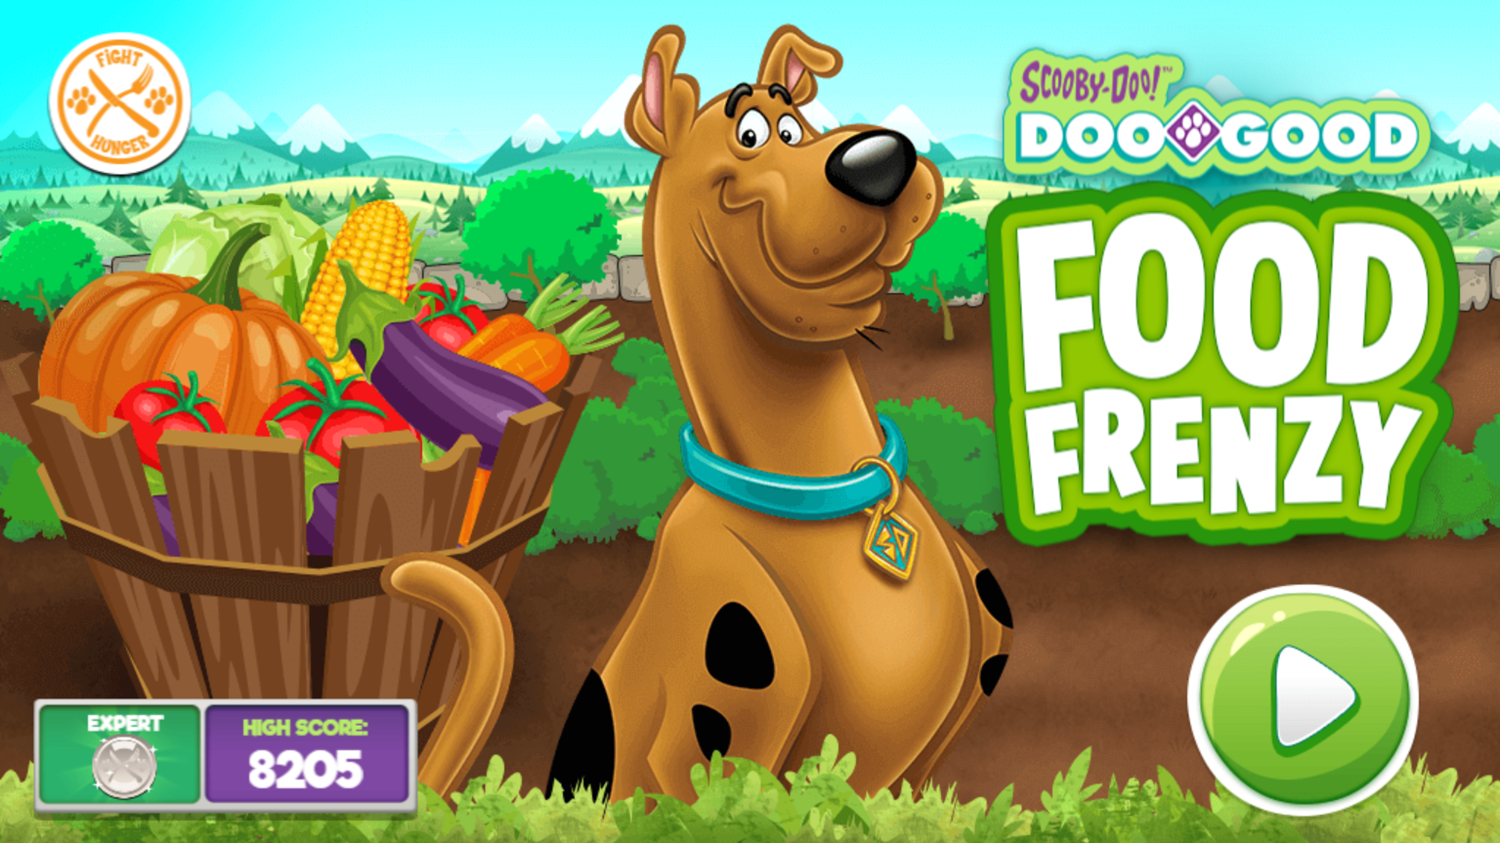 Scooby Doo Do Good Food Frenzy Game Welcome Screen Screenshot.